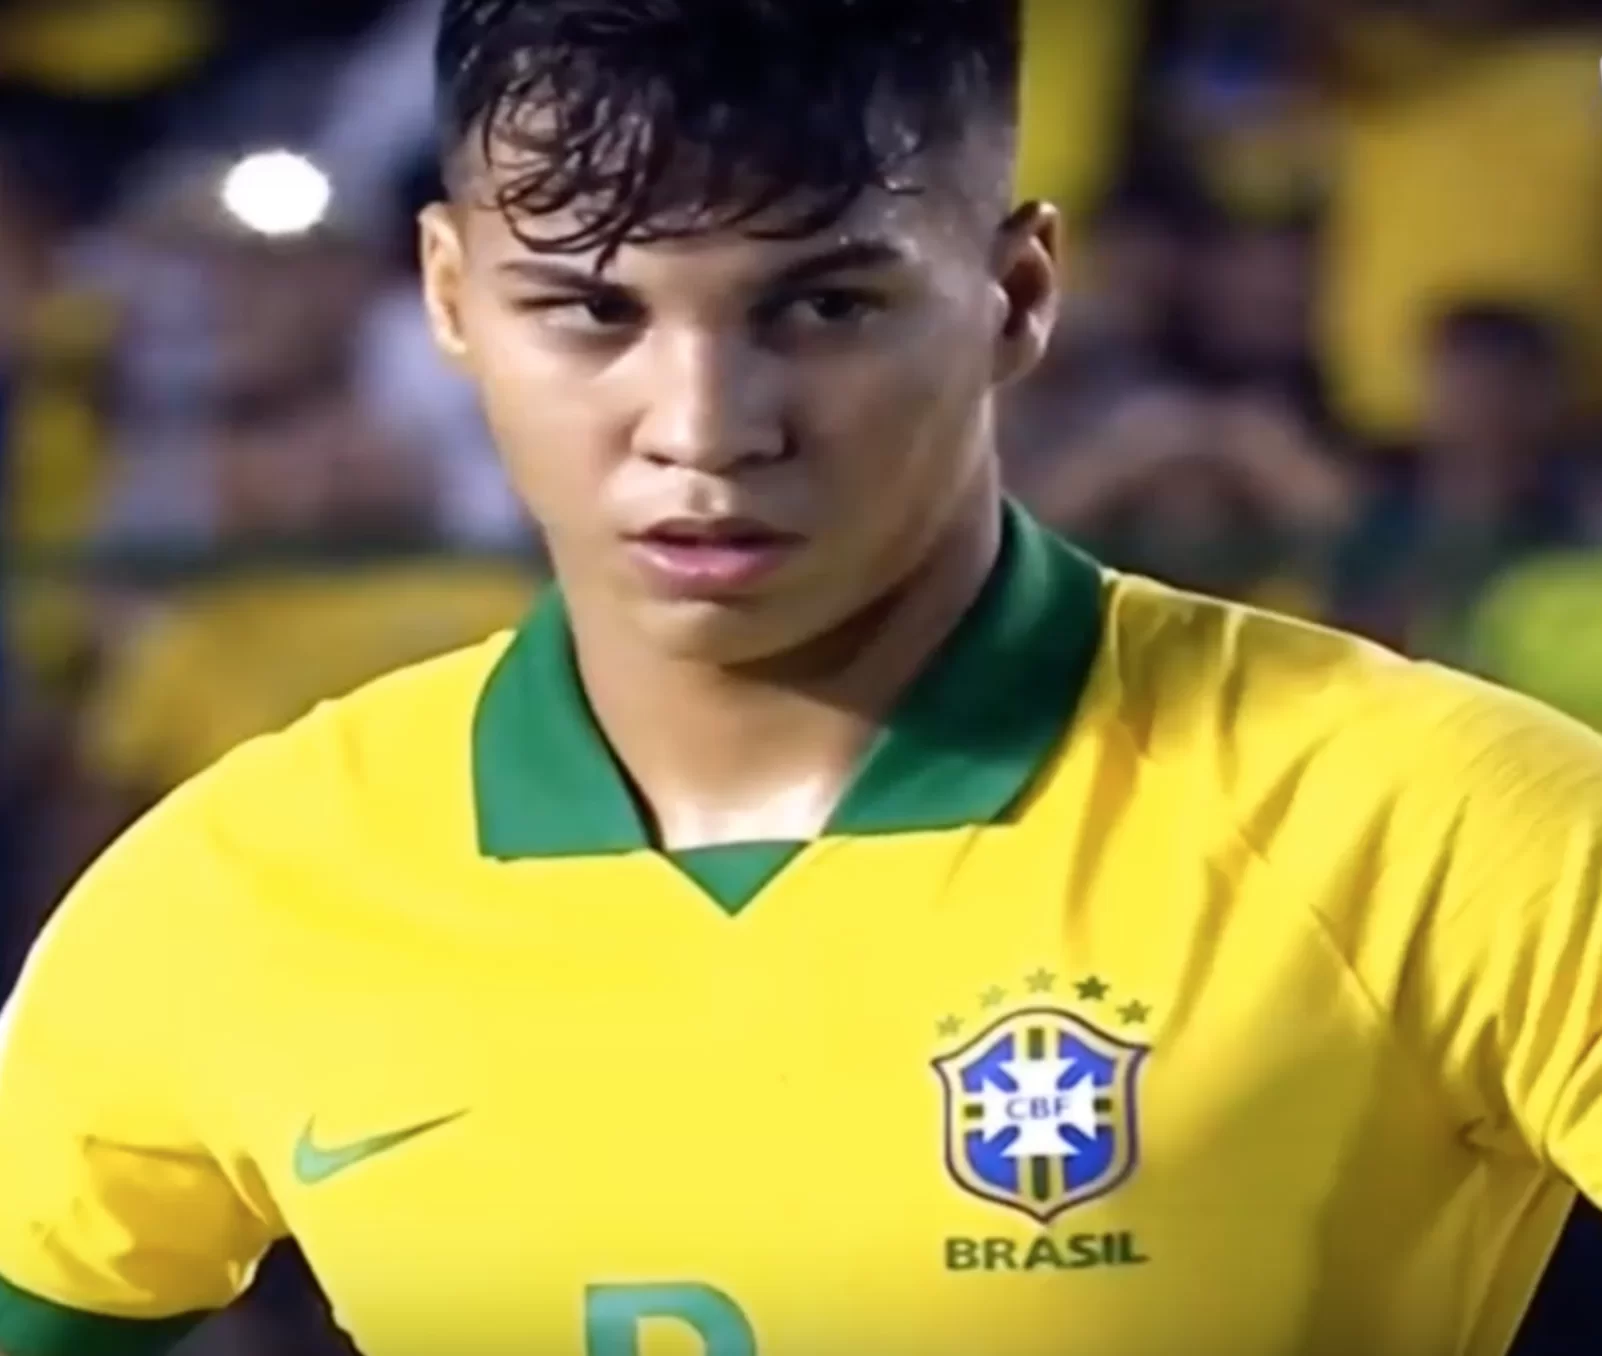 Calciomercato: La Juve su un giovane attaccante del Santos